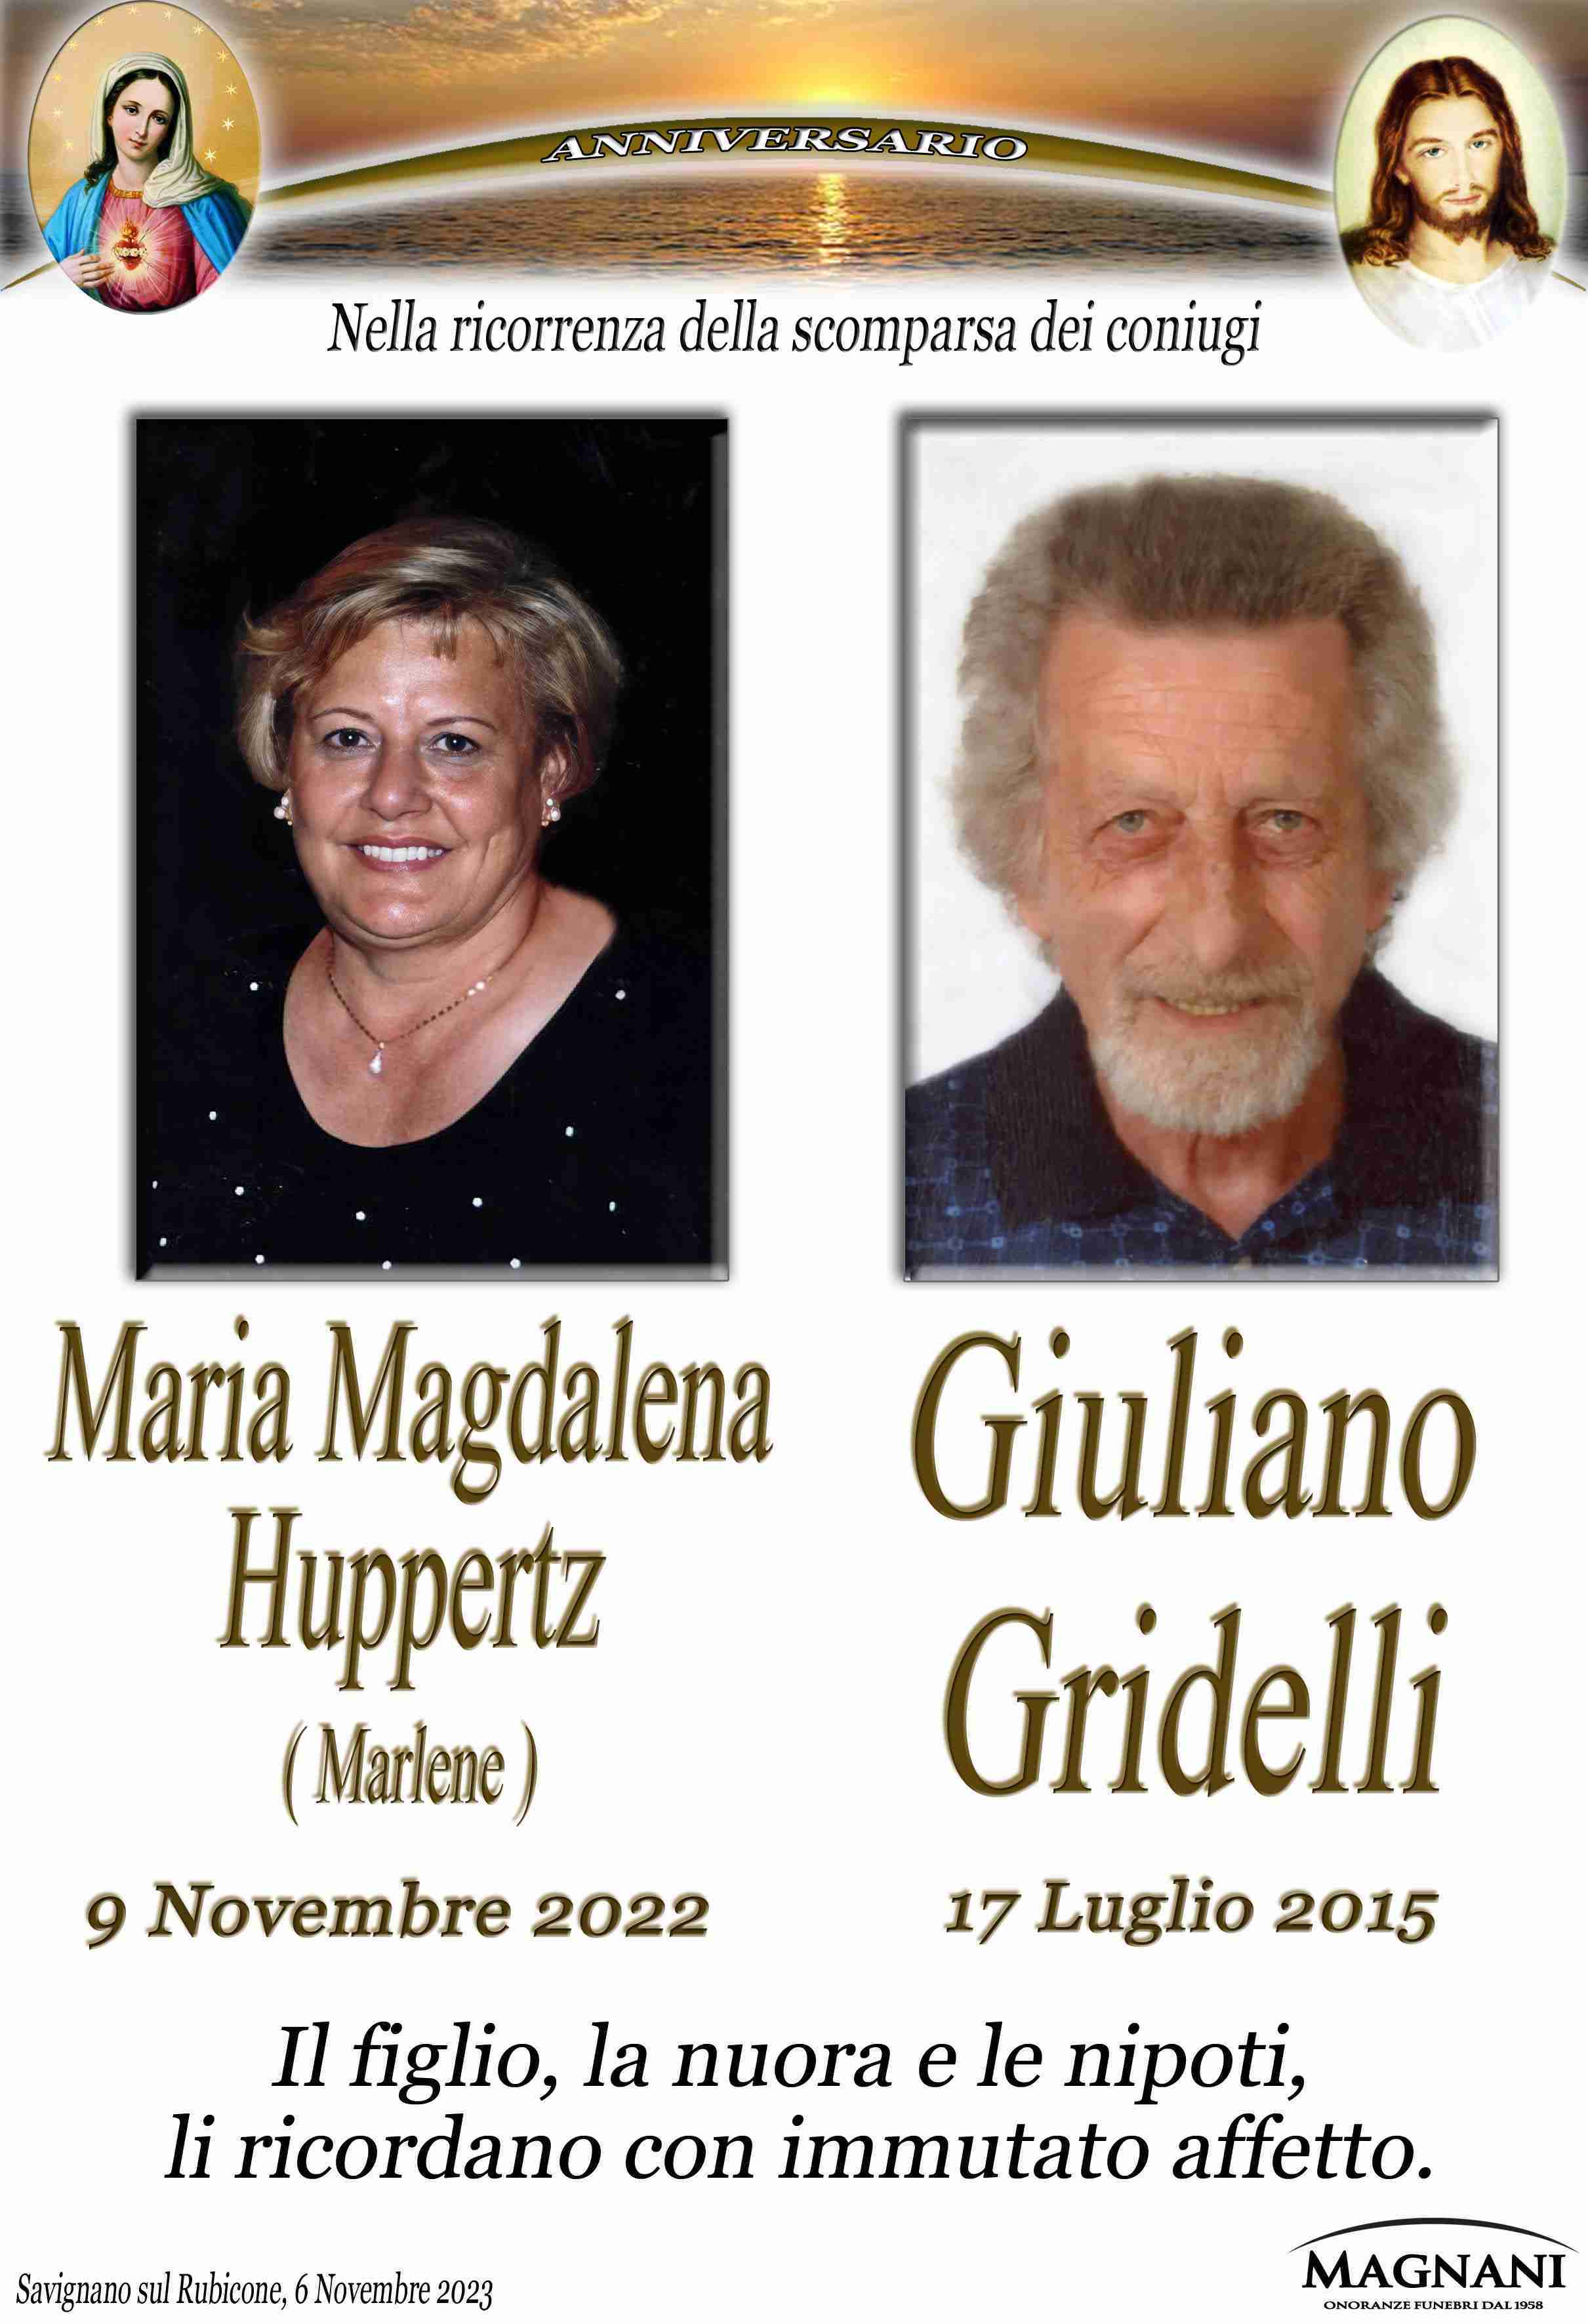 Maria Magdalena Huppertz e Giuliano Gridelli